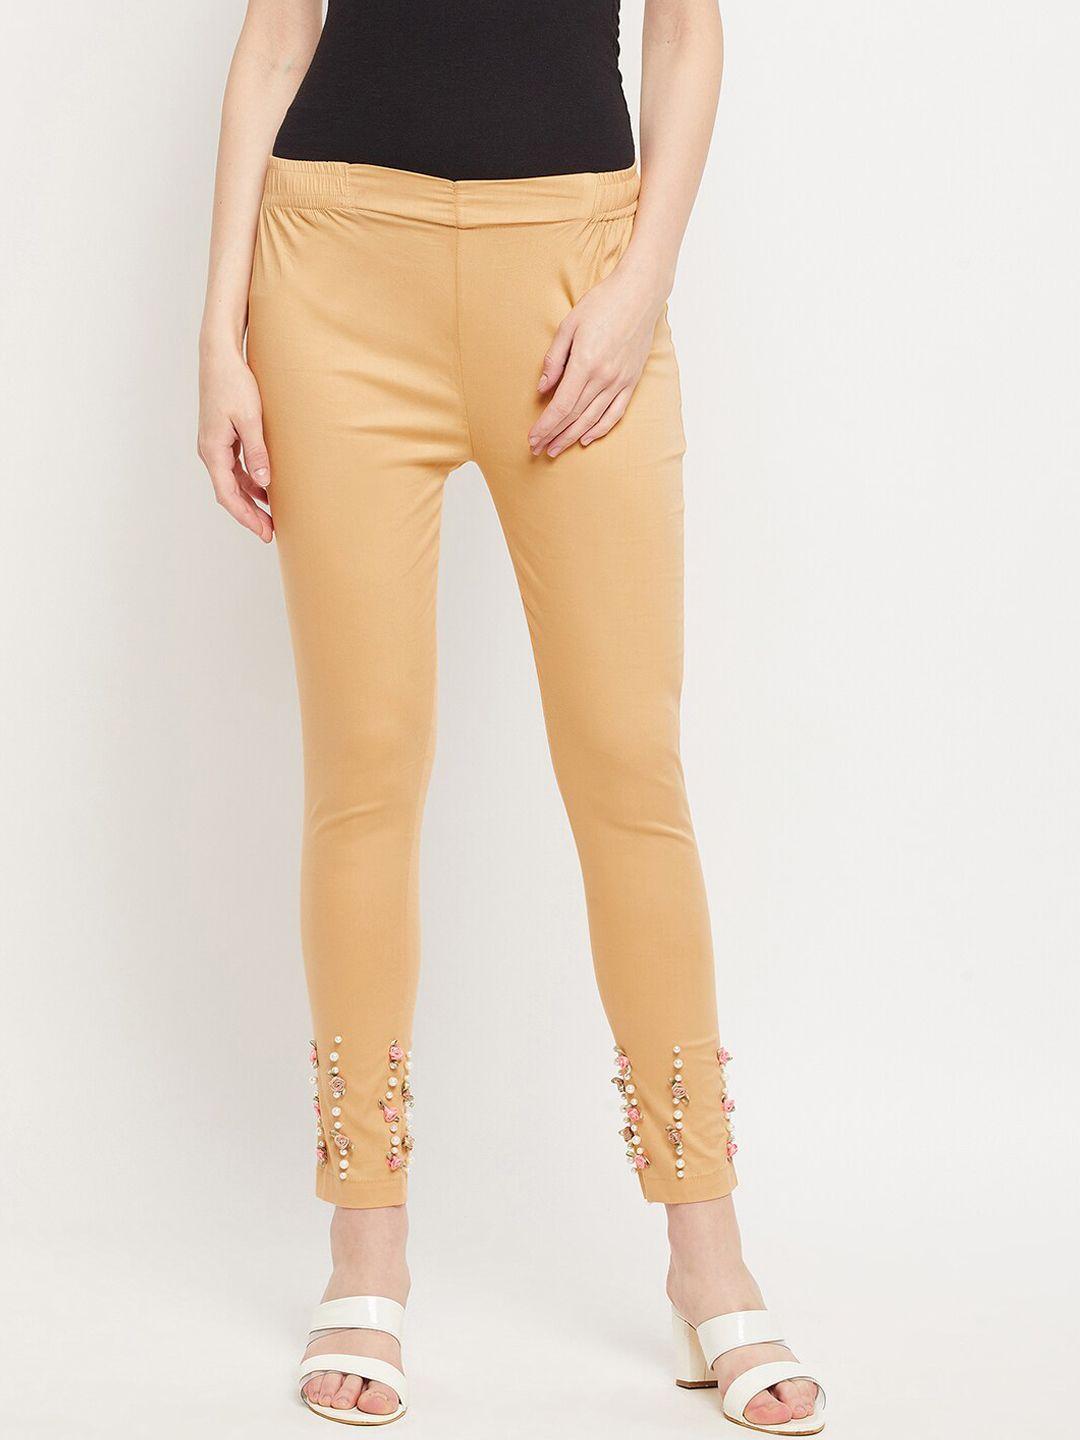 clora-creation-women-beige-embellished-trousers